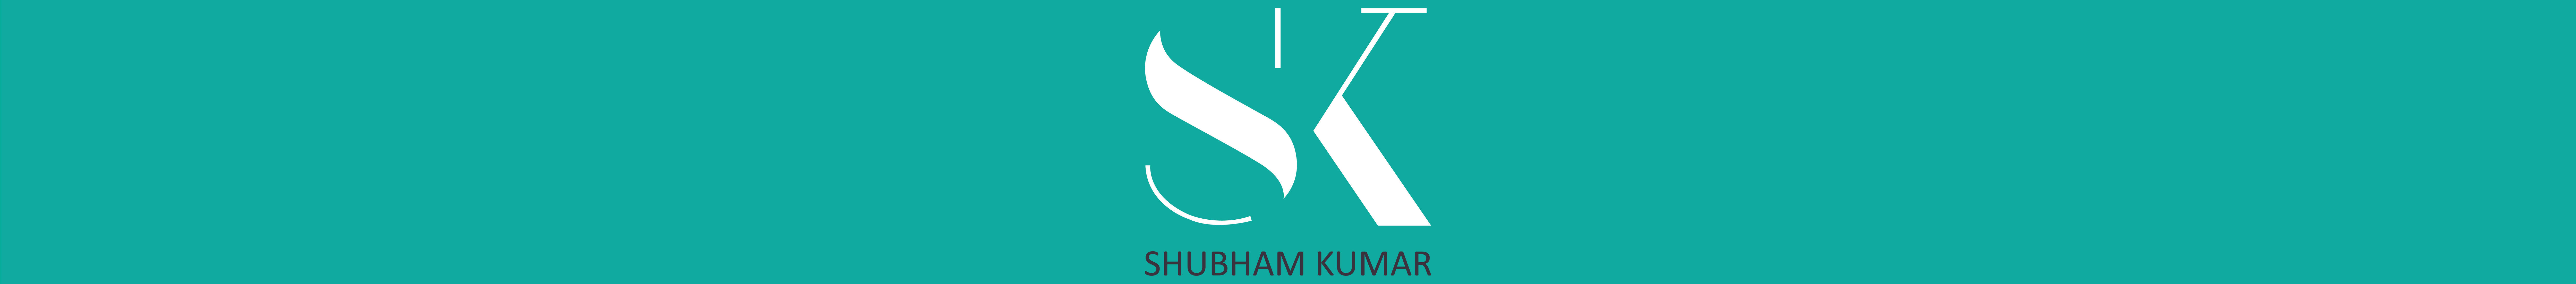 Banner profilu uživatele Shubham Kumar